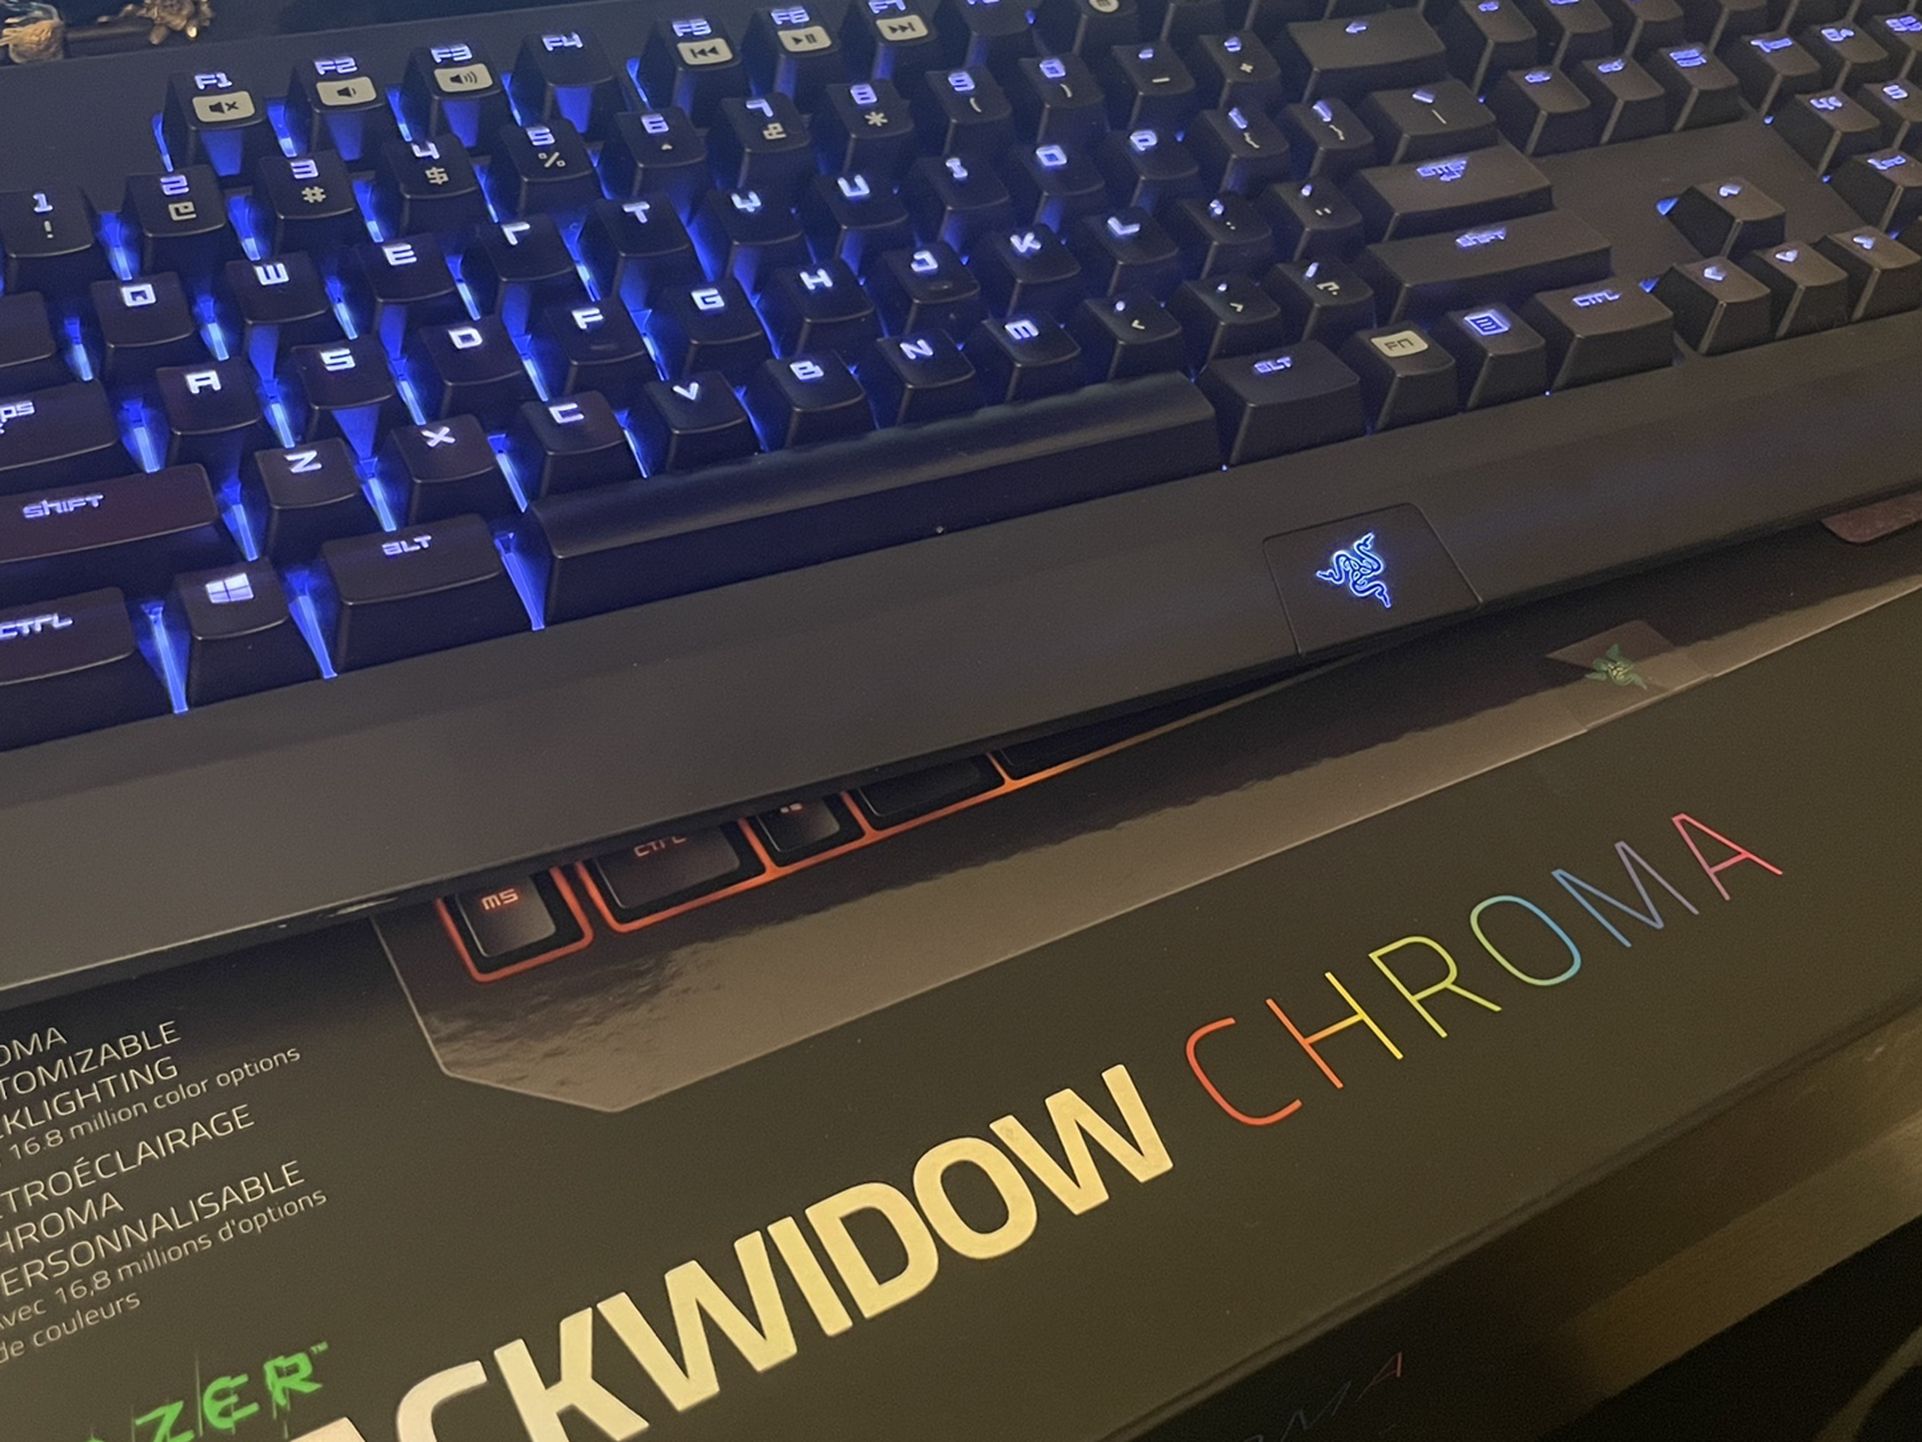 Blackwidow Chroma Mechanical Keyboard